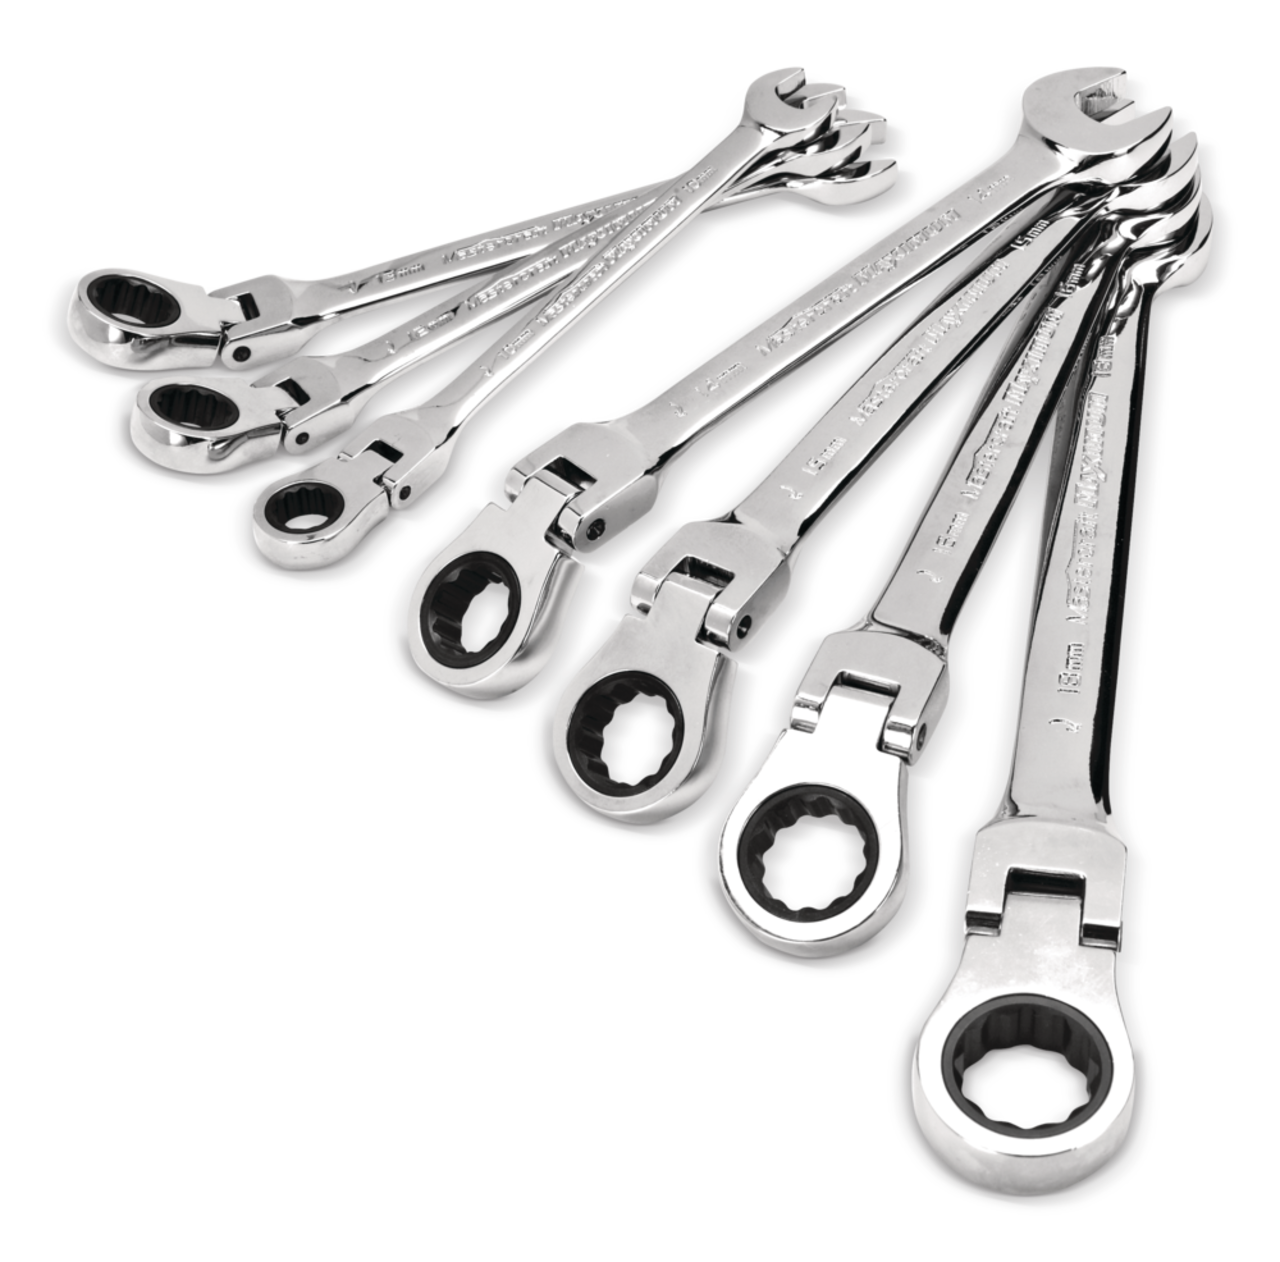 MAXIMUM Flexhead Ratcheting Wrench Set, Alloy Steel, 7-pc, Metric